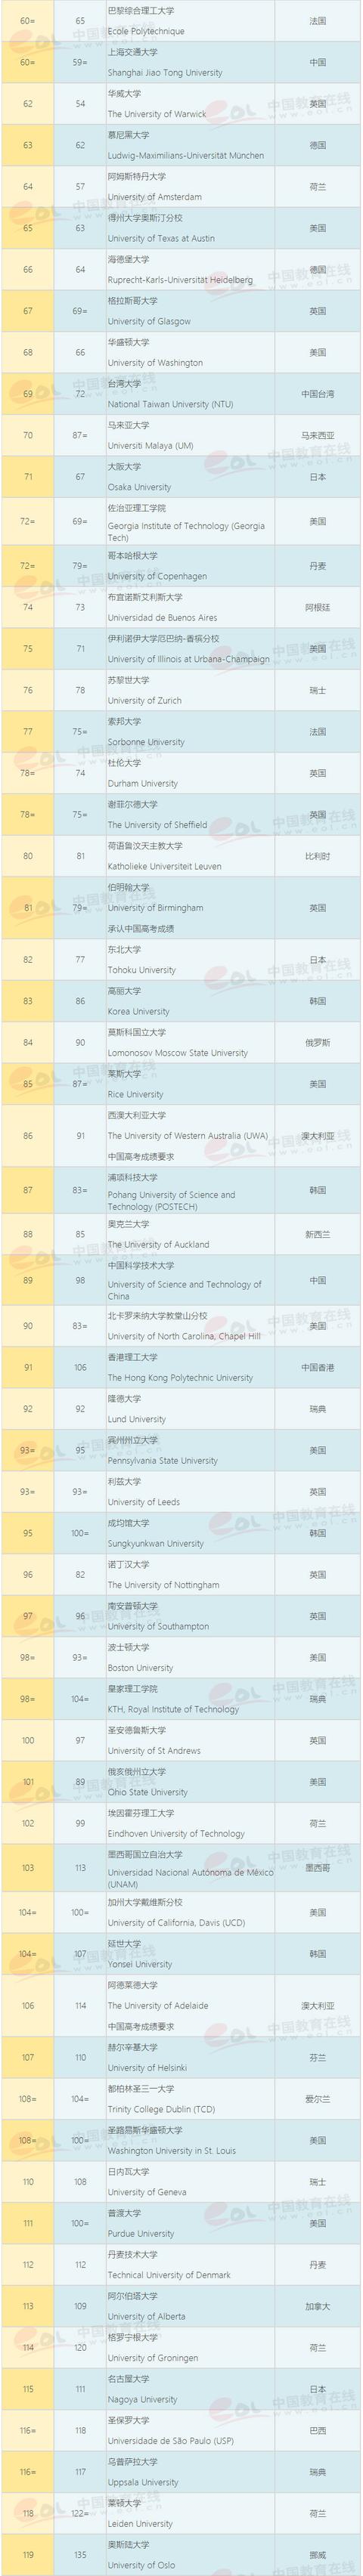 2020QS世界大学排名公布 Top200完整榜单